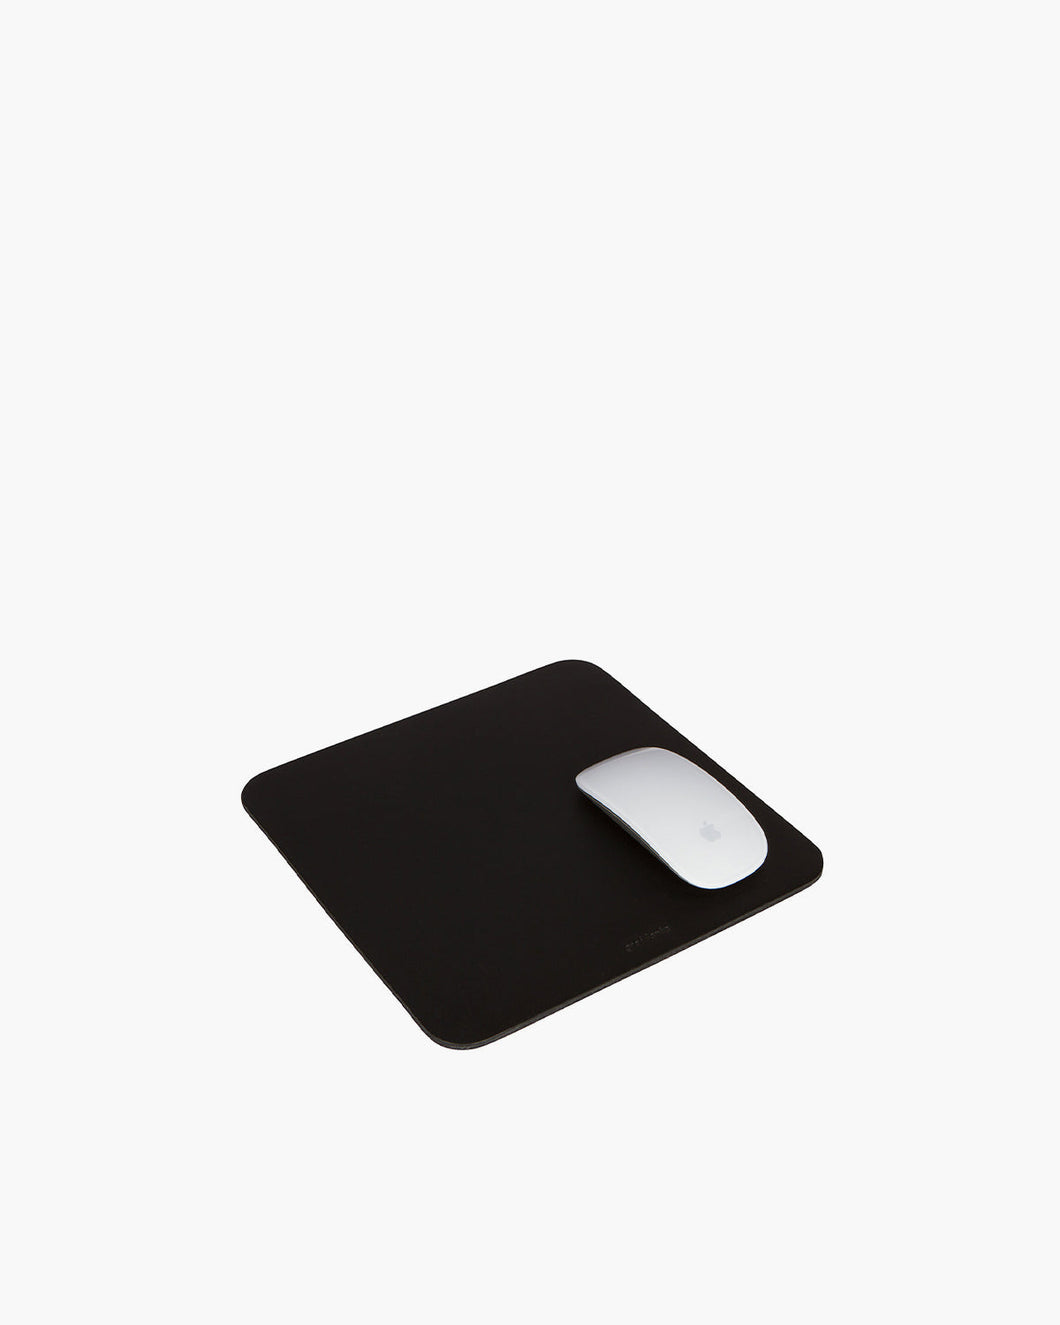 Mausu Mouse Pad Square Leather/Felt Charcoal